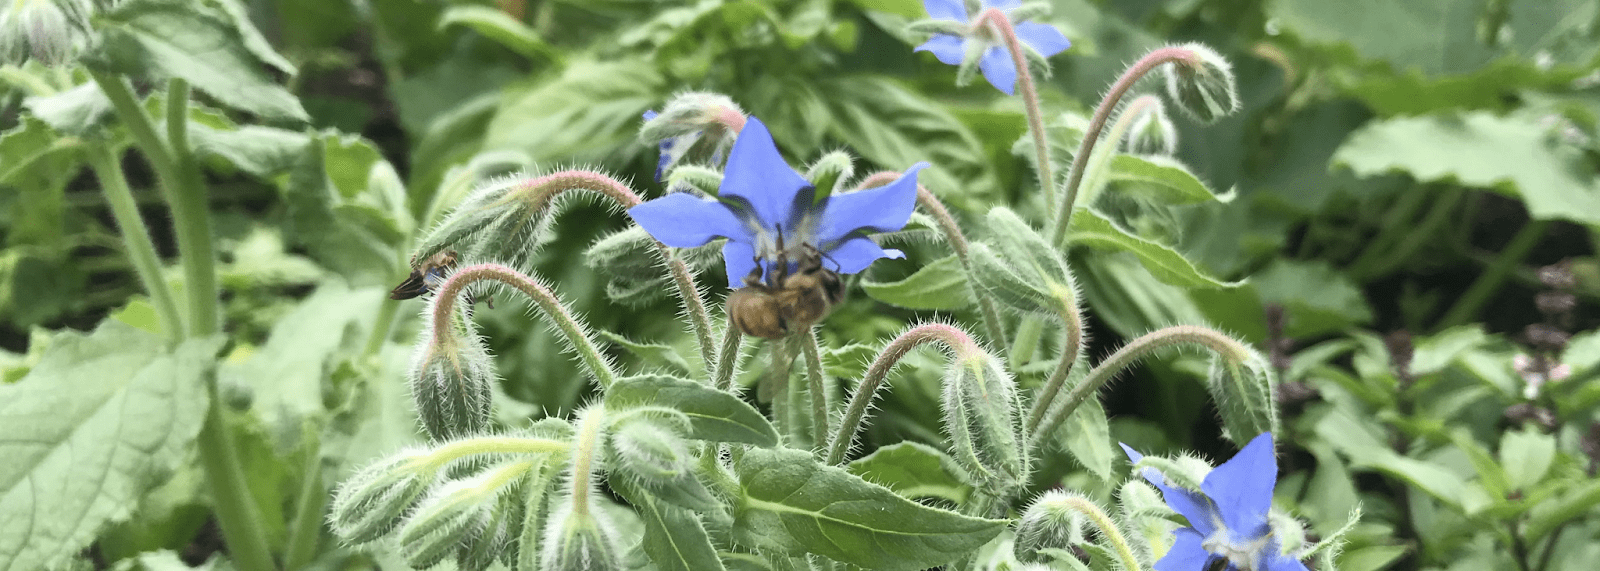 Gambar selebar header bunga periwinkle yang dikelilingi daun dan batangnya, sedang dikunjungi oleh lebah madu.